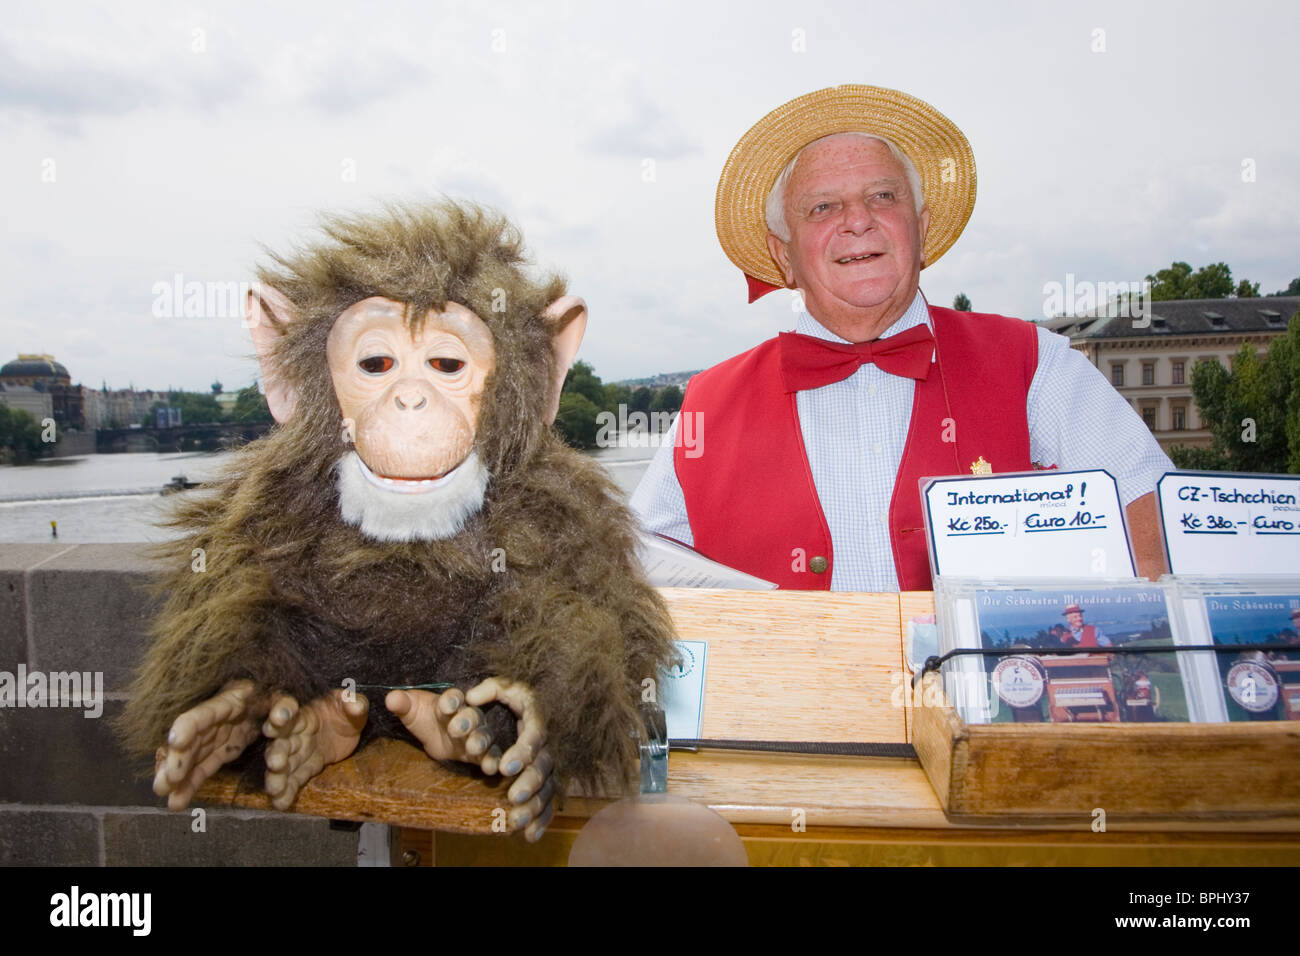 Barrel Organ man with his monkey on the Charles Bridge in Prague, Czech Republic Stock Photo